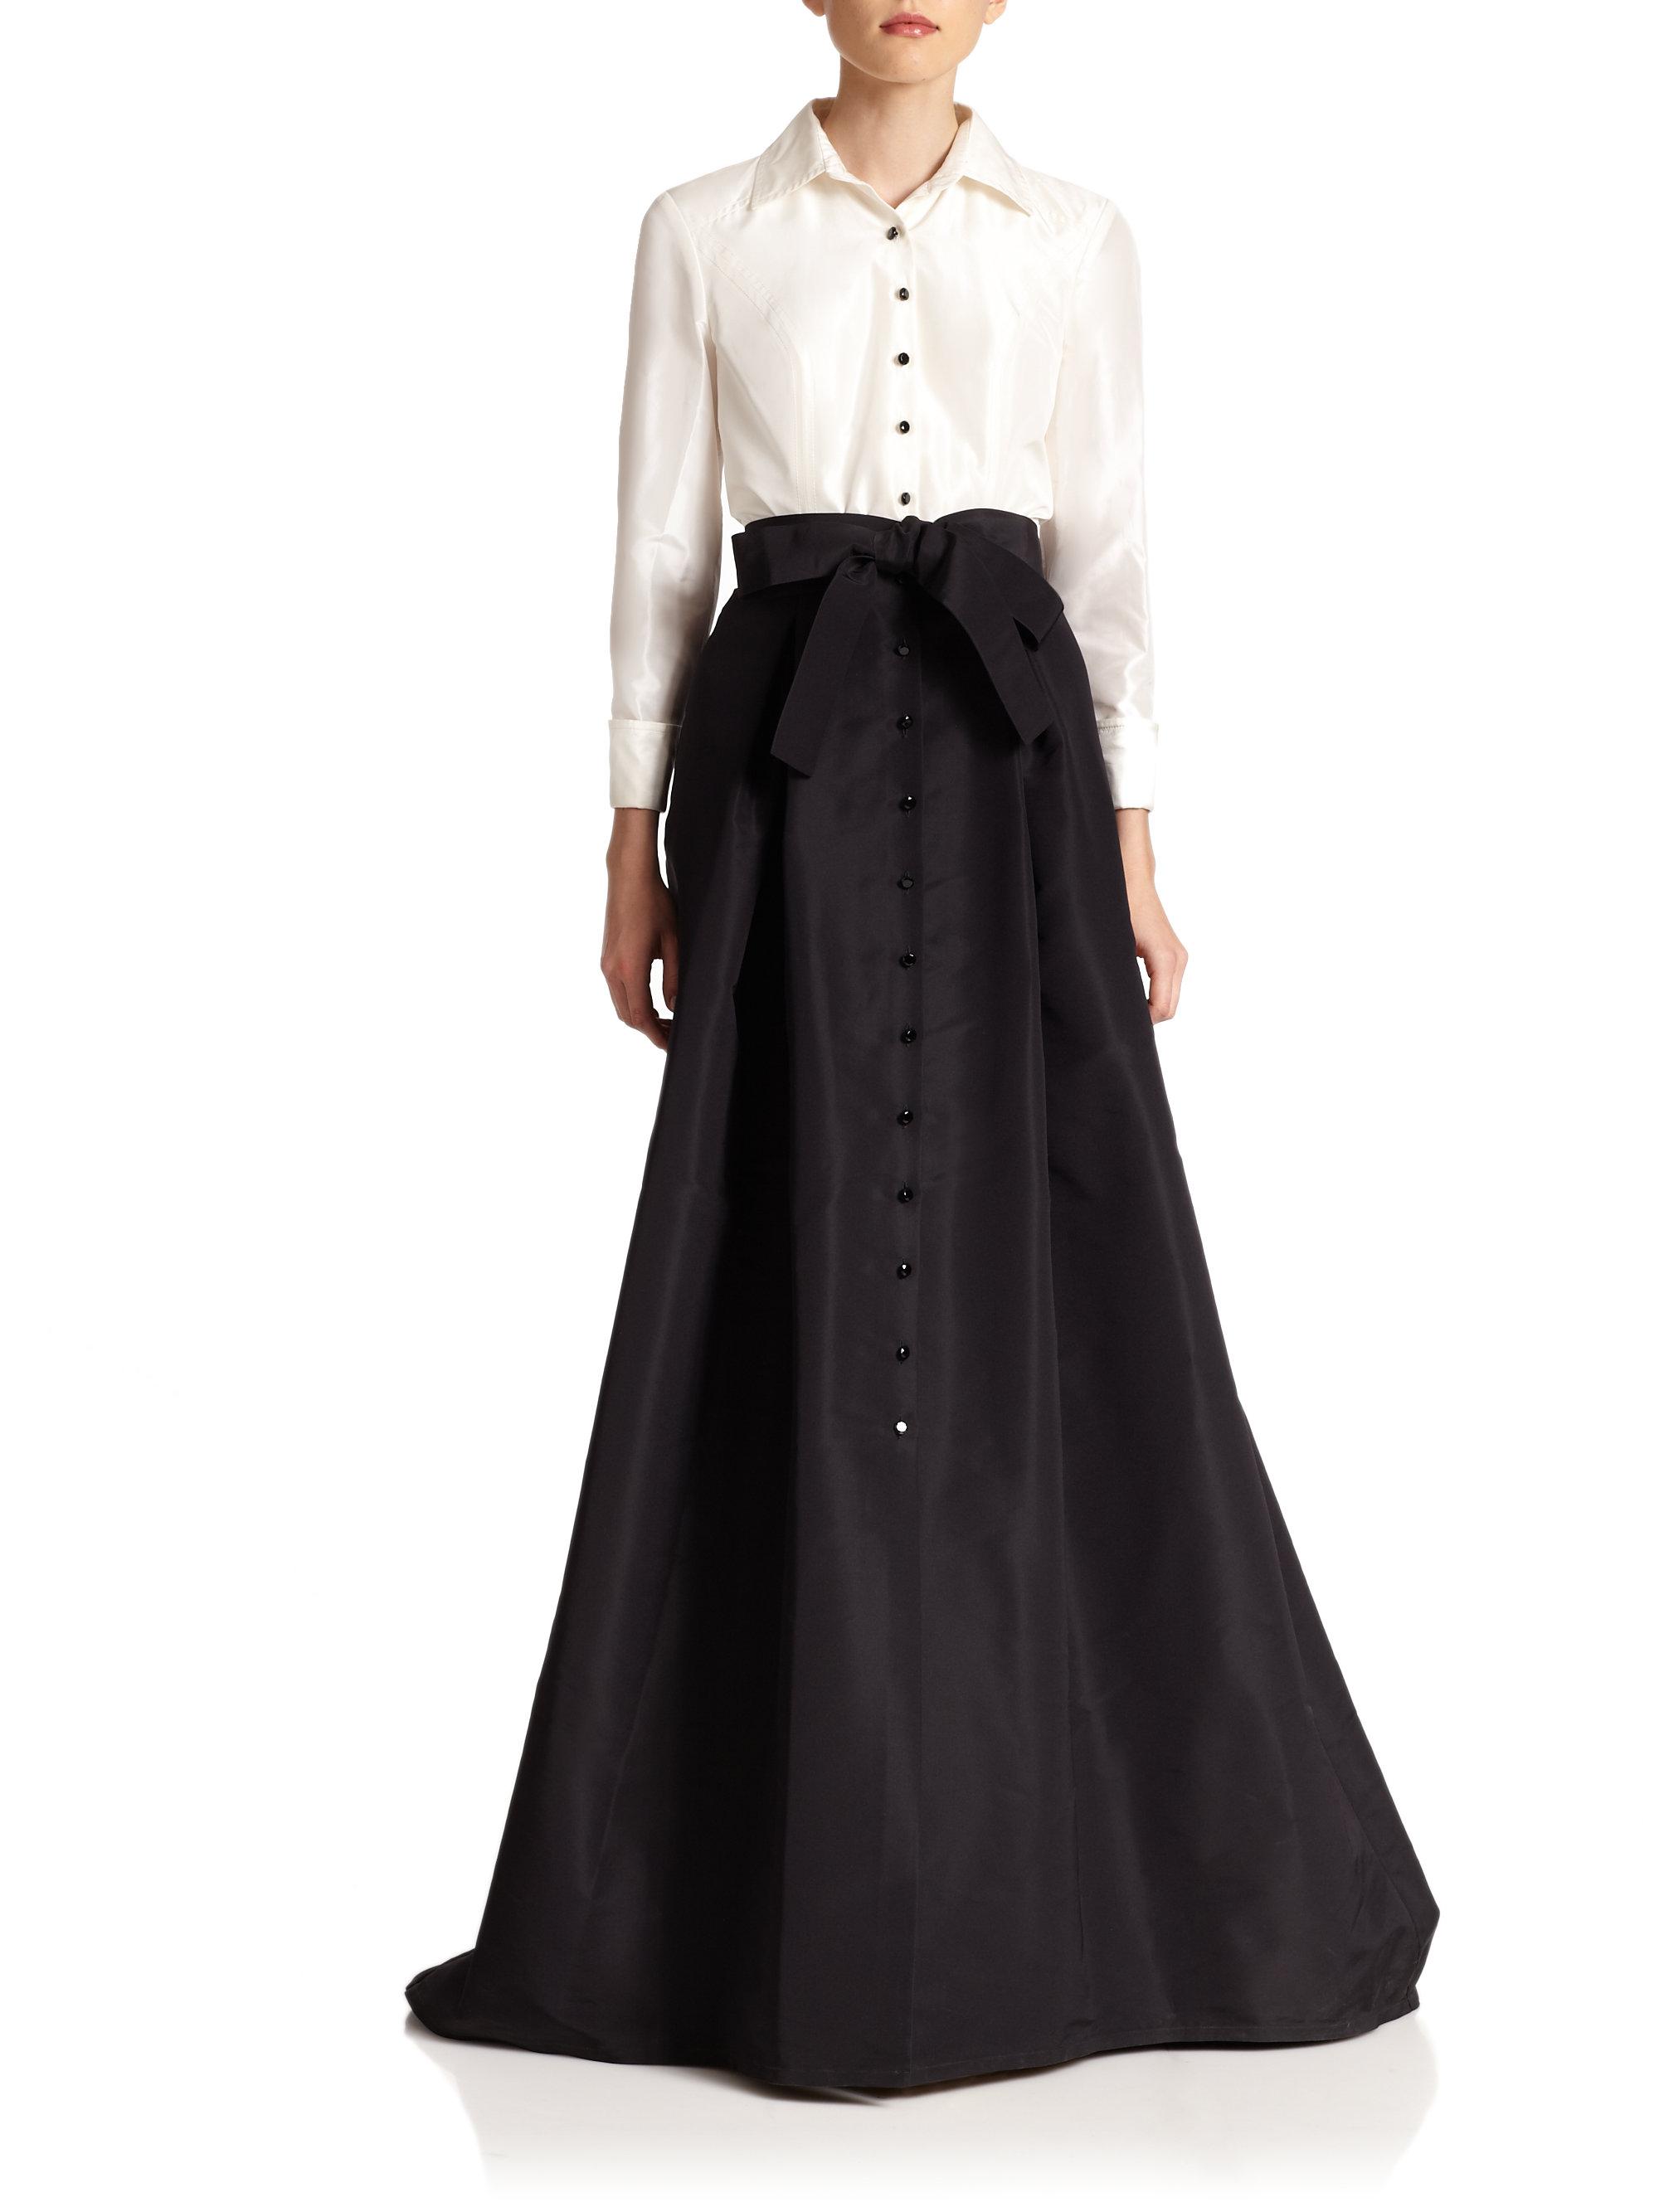 Lyst - Carolina Herrera Icon Collection Silk Taffeta Trench Gown in Black